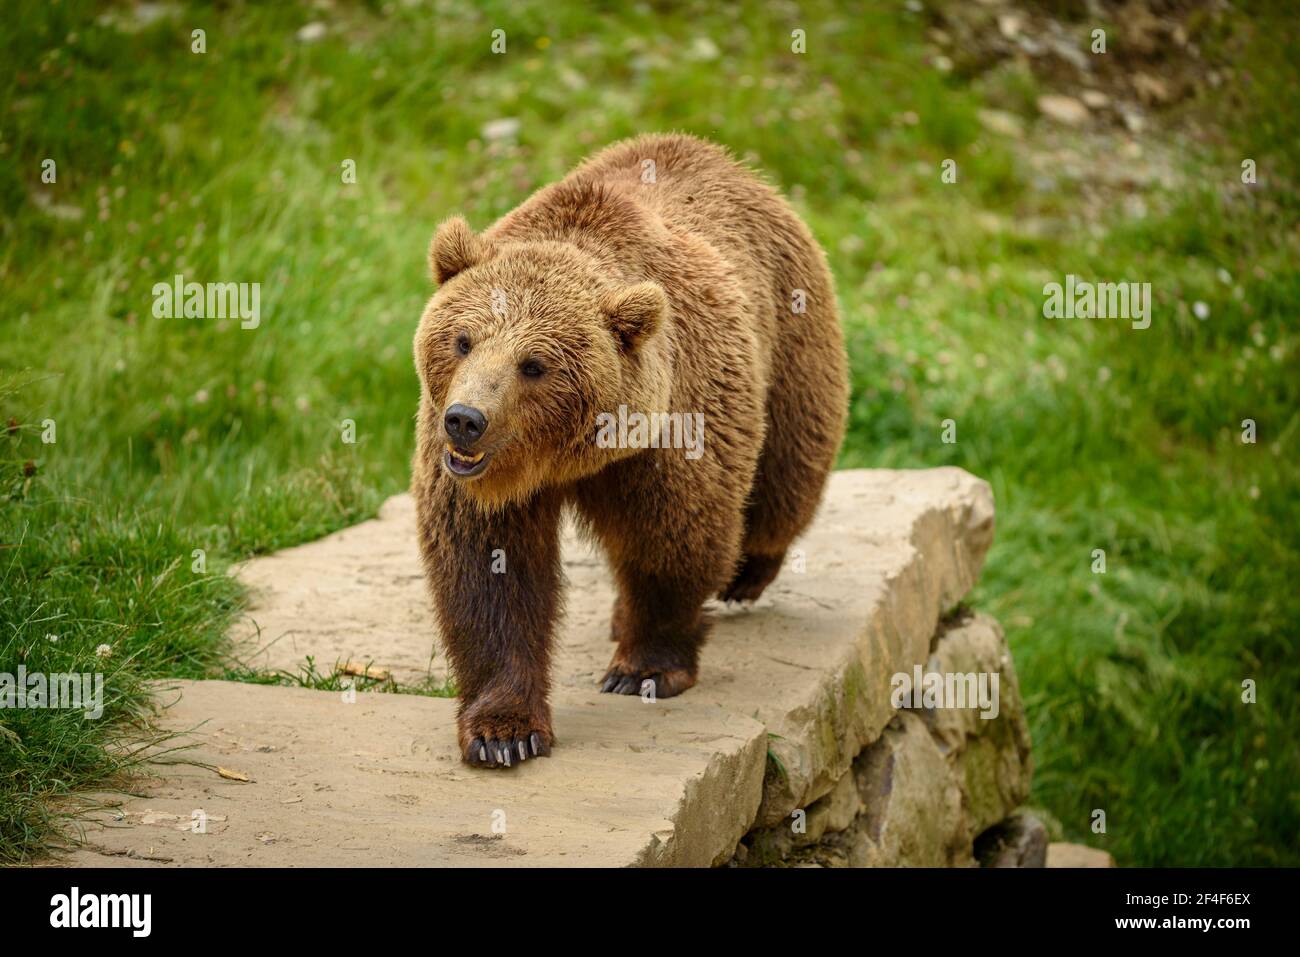 Orso bruno (Ursus arctos) nel parco zoologico di Aran (Valle di Aran, Catalogna, Pirenei, Spagna) ESP: Oso pardo del parque de animales Parco Aran Foto Stock